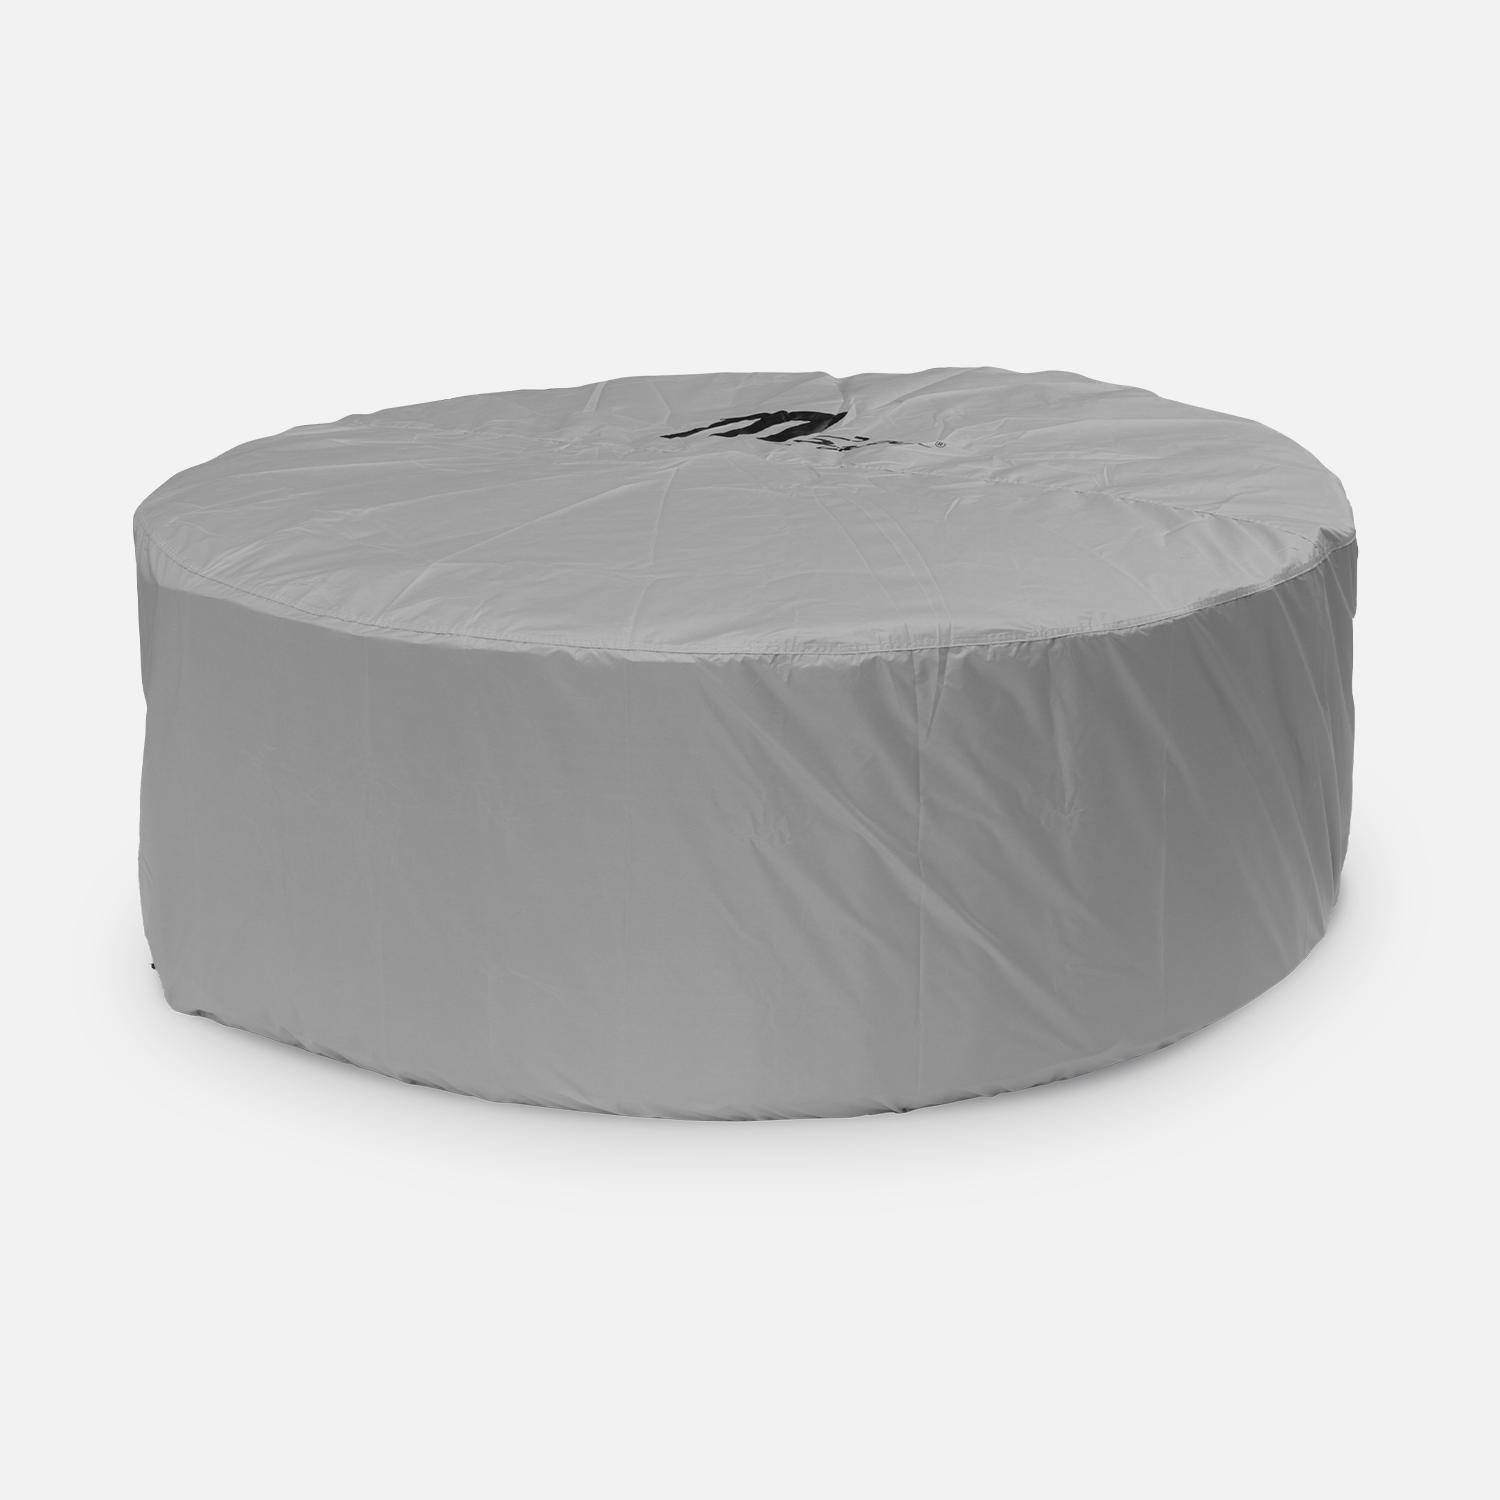 Cubierta protectora integral para spa inflable cuadrado o redondo para 4 personas MSPA- Ø 190x70cm Photo1